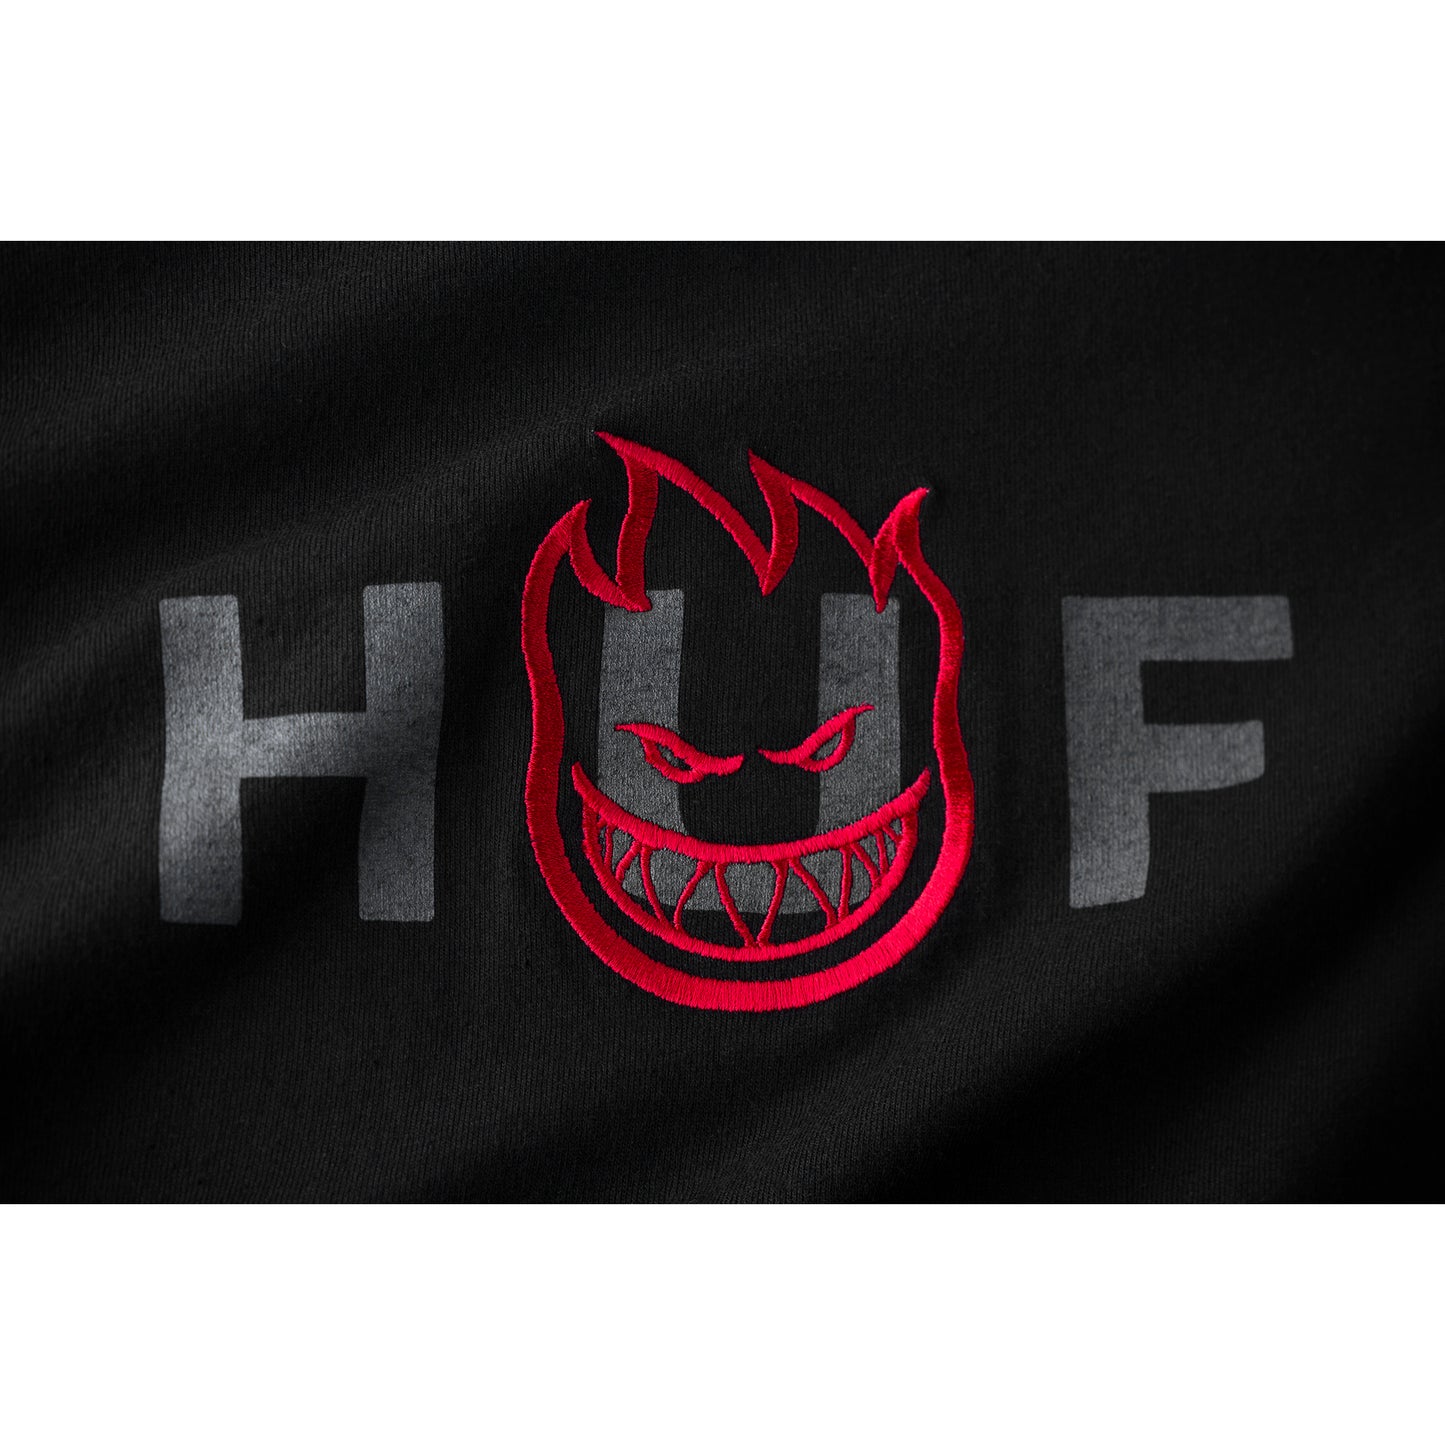 HUF x Spitfire - OG Logo Men's Tee, Black